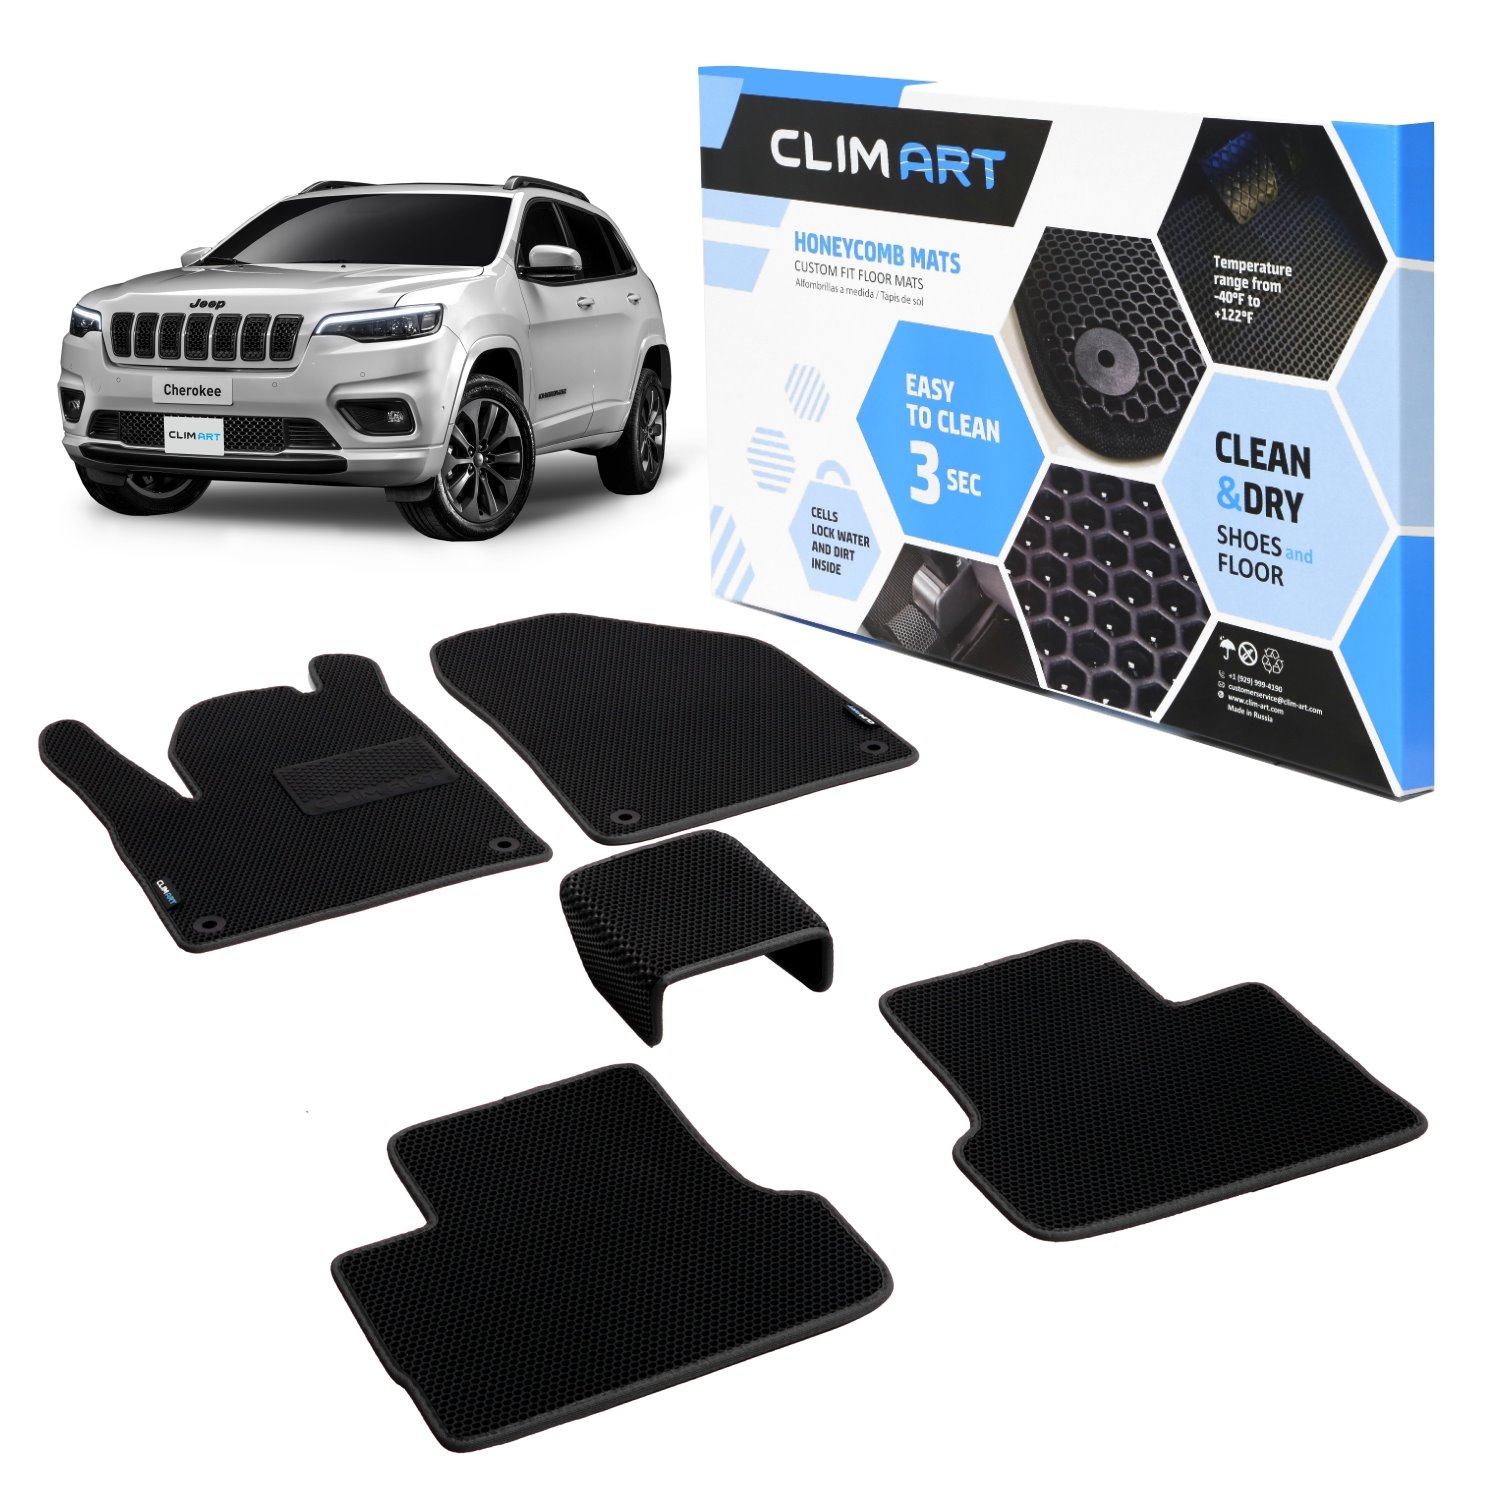 CLIM ART Honeycomb Custom Fit Floor Mats Fits Select Jeep Cherokee